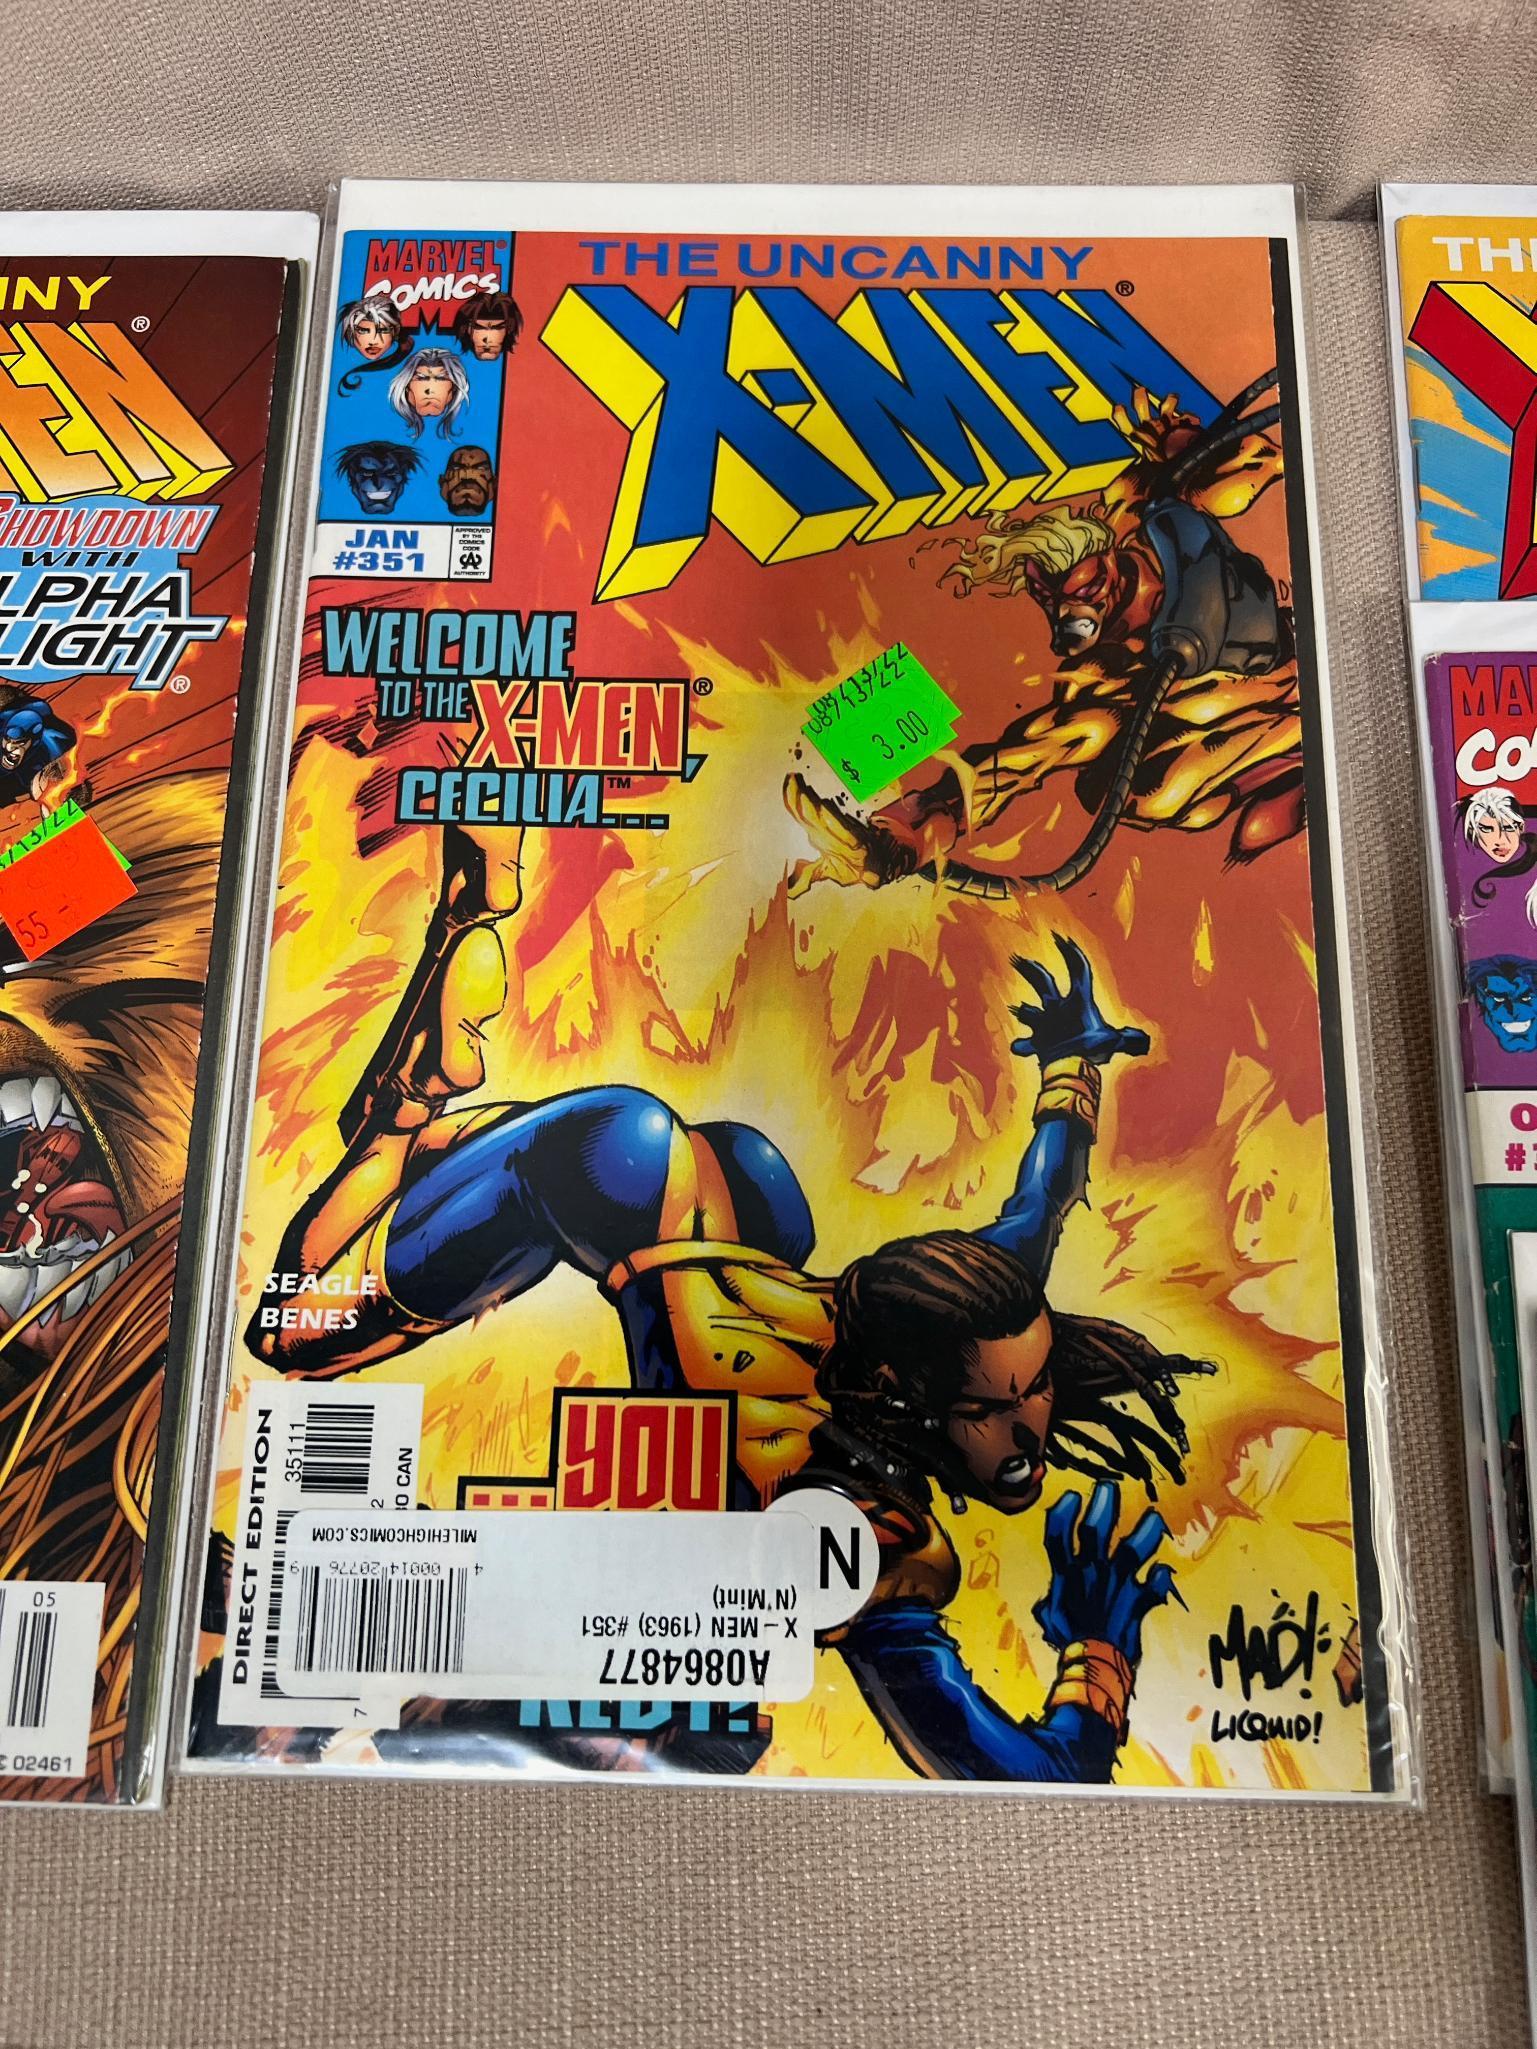 24 Uncanny X-Men Comic Books, see list below